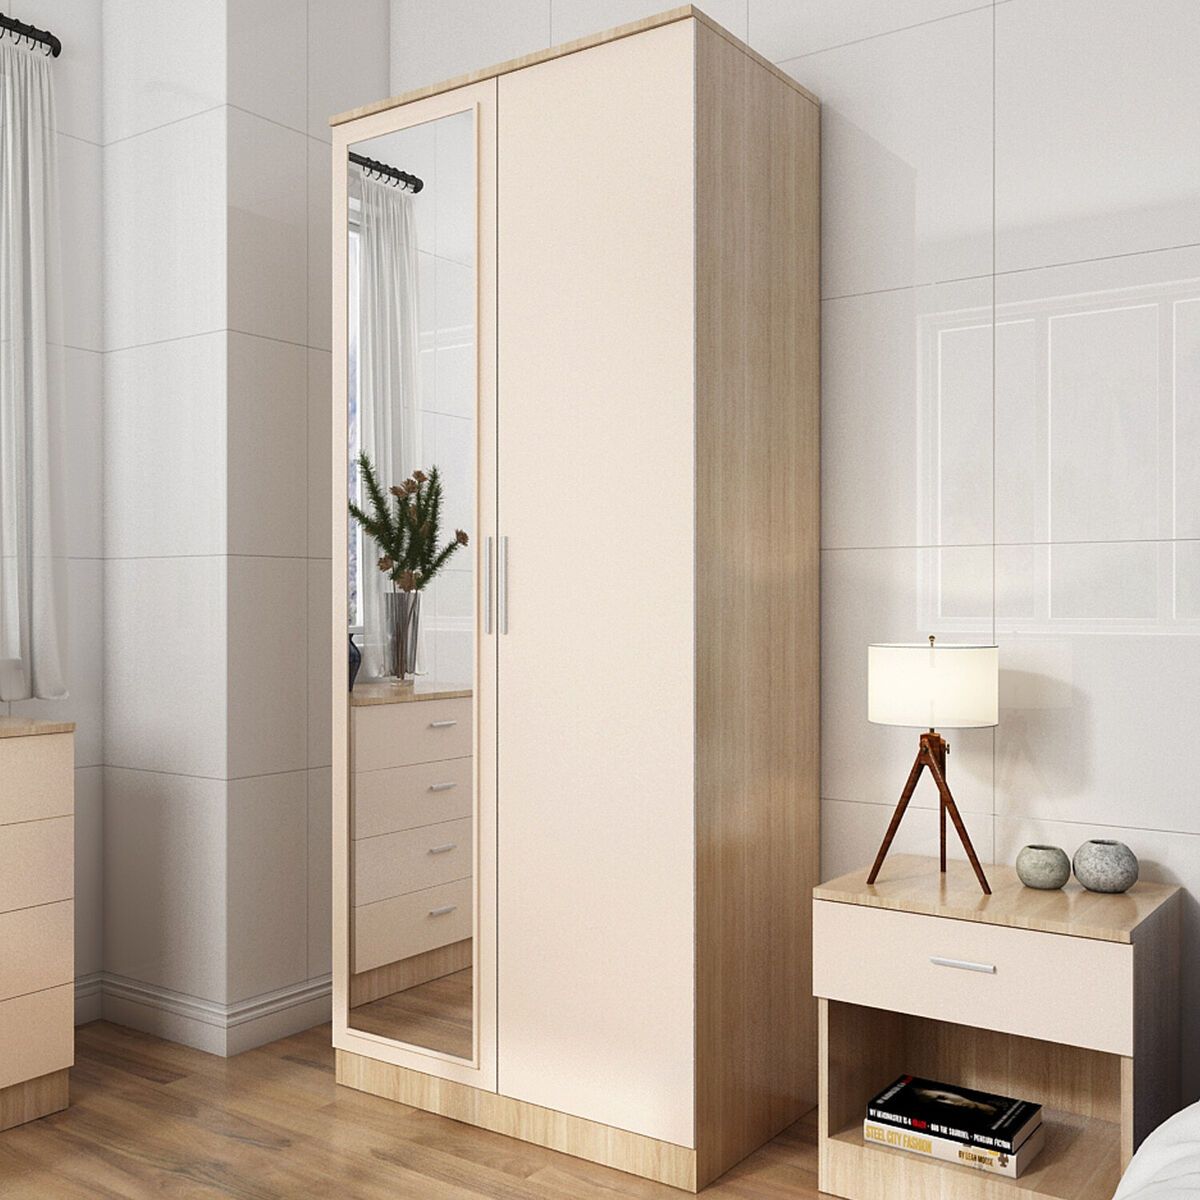 High Gloss Cream Wardrobe Double Door With Hanging Rail Bedroom Furniture  Set | Ebay Regarding Cream Gloss Wardrobes (Photo 5 of 15)